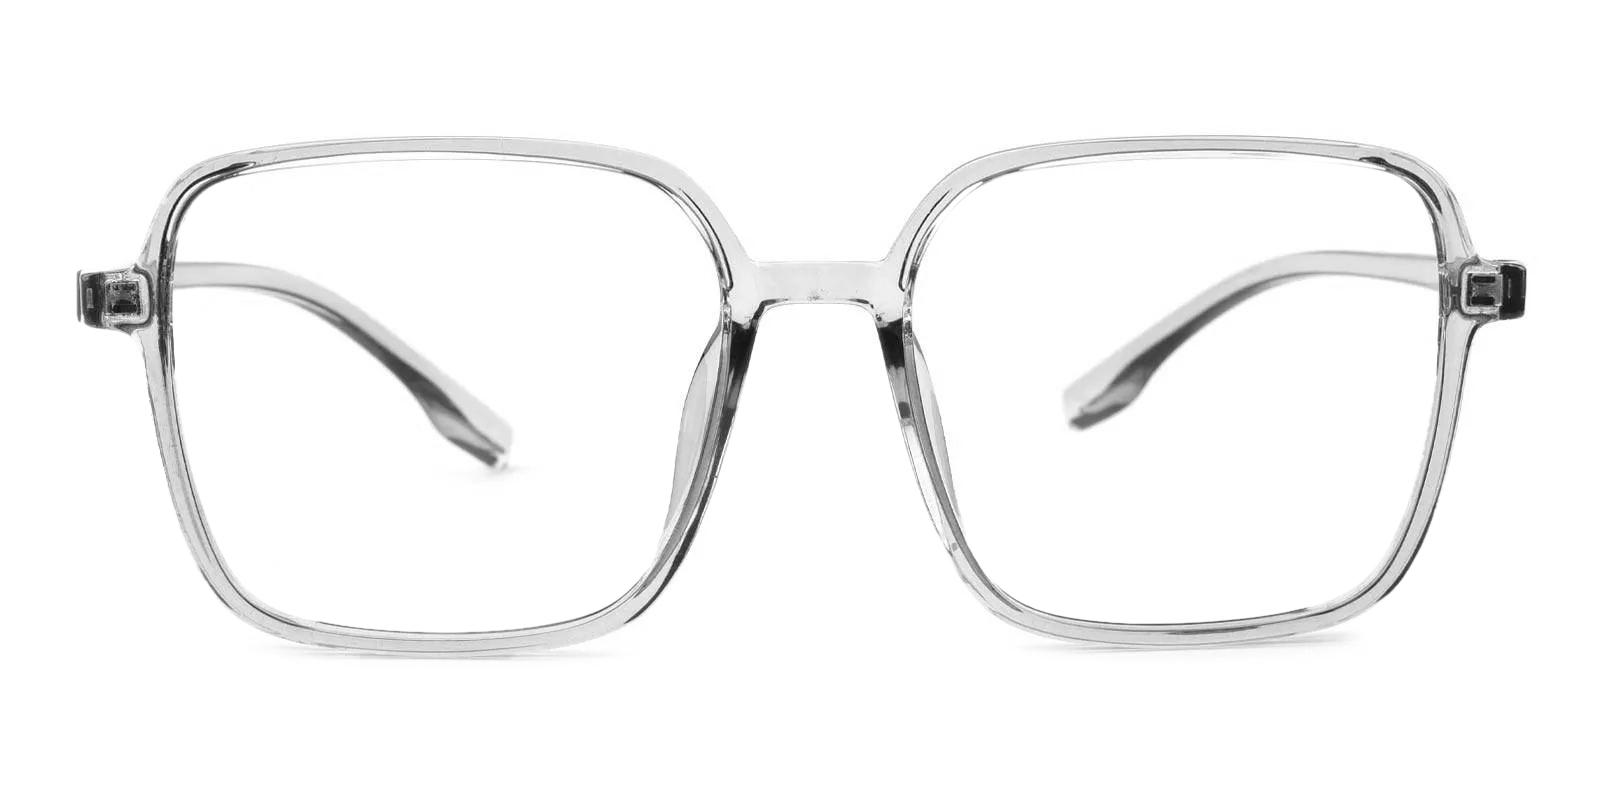 Rainbow Gray Plastic UniversalBridgeFit , Fashion , Eyeglasses Frames from ABBE Glasses